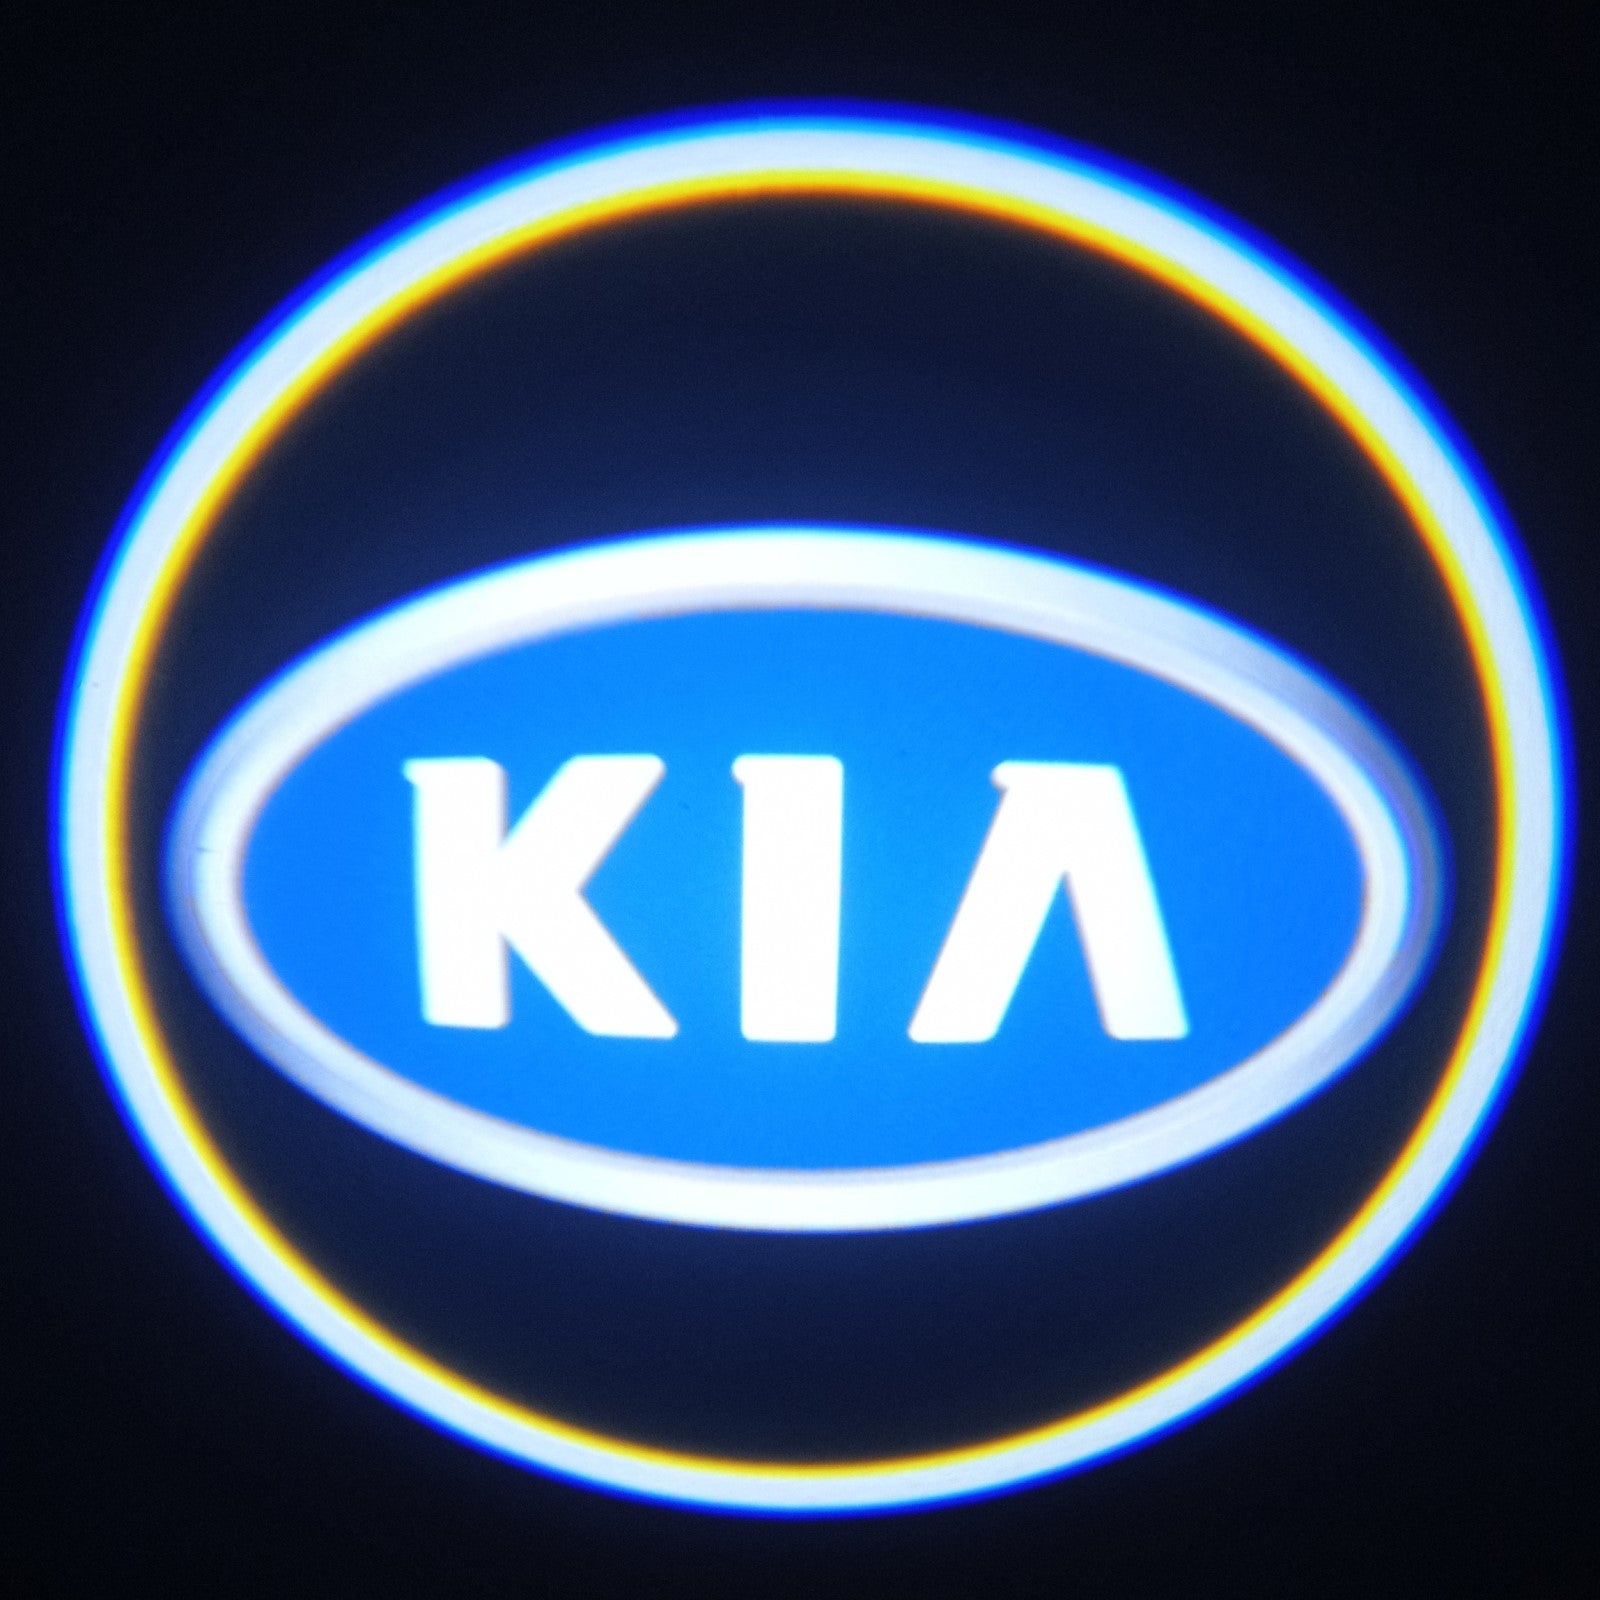 Luzes Cortesia com Logotipo marca Kia